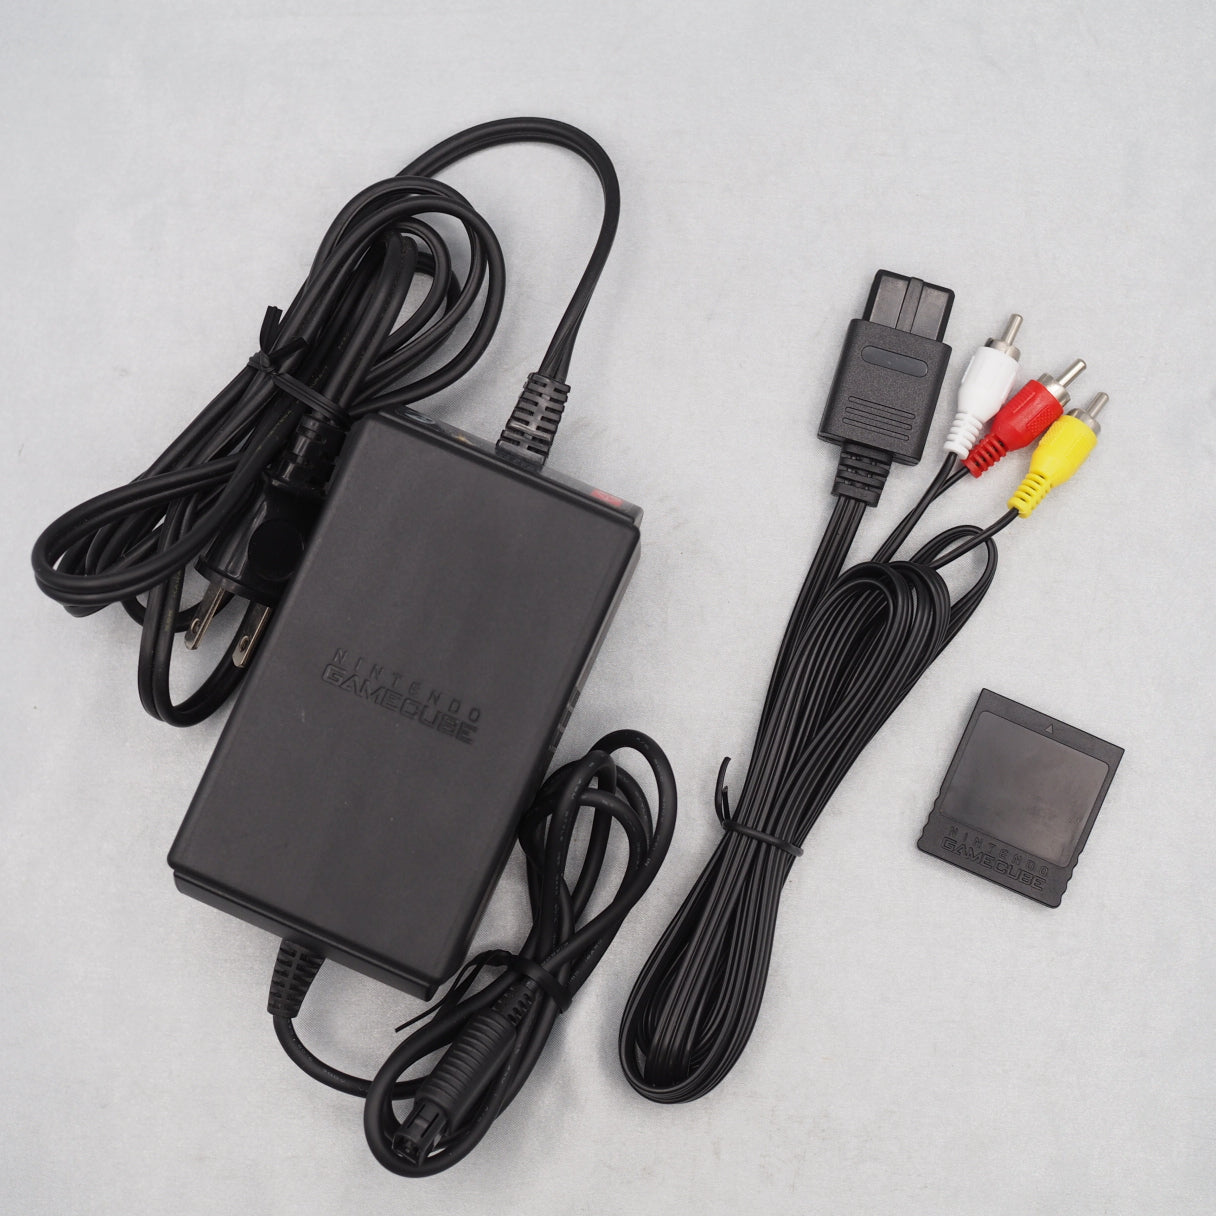 Nintendo GameCube Console System Black Boxed